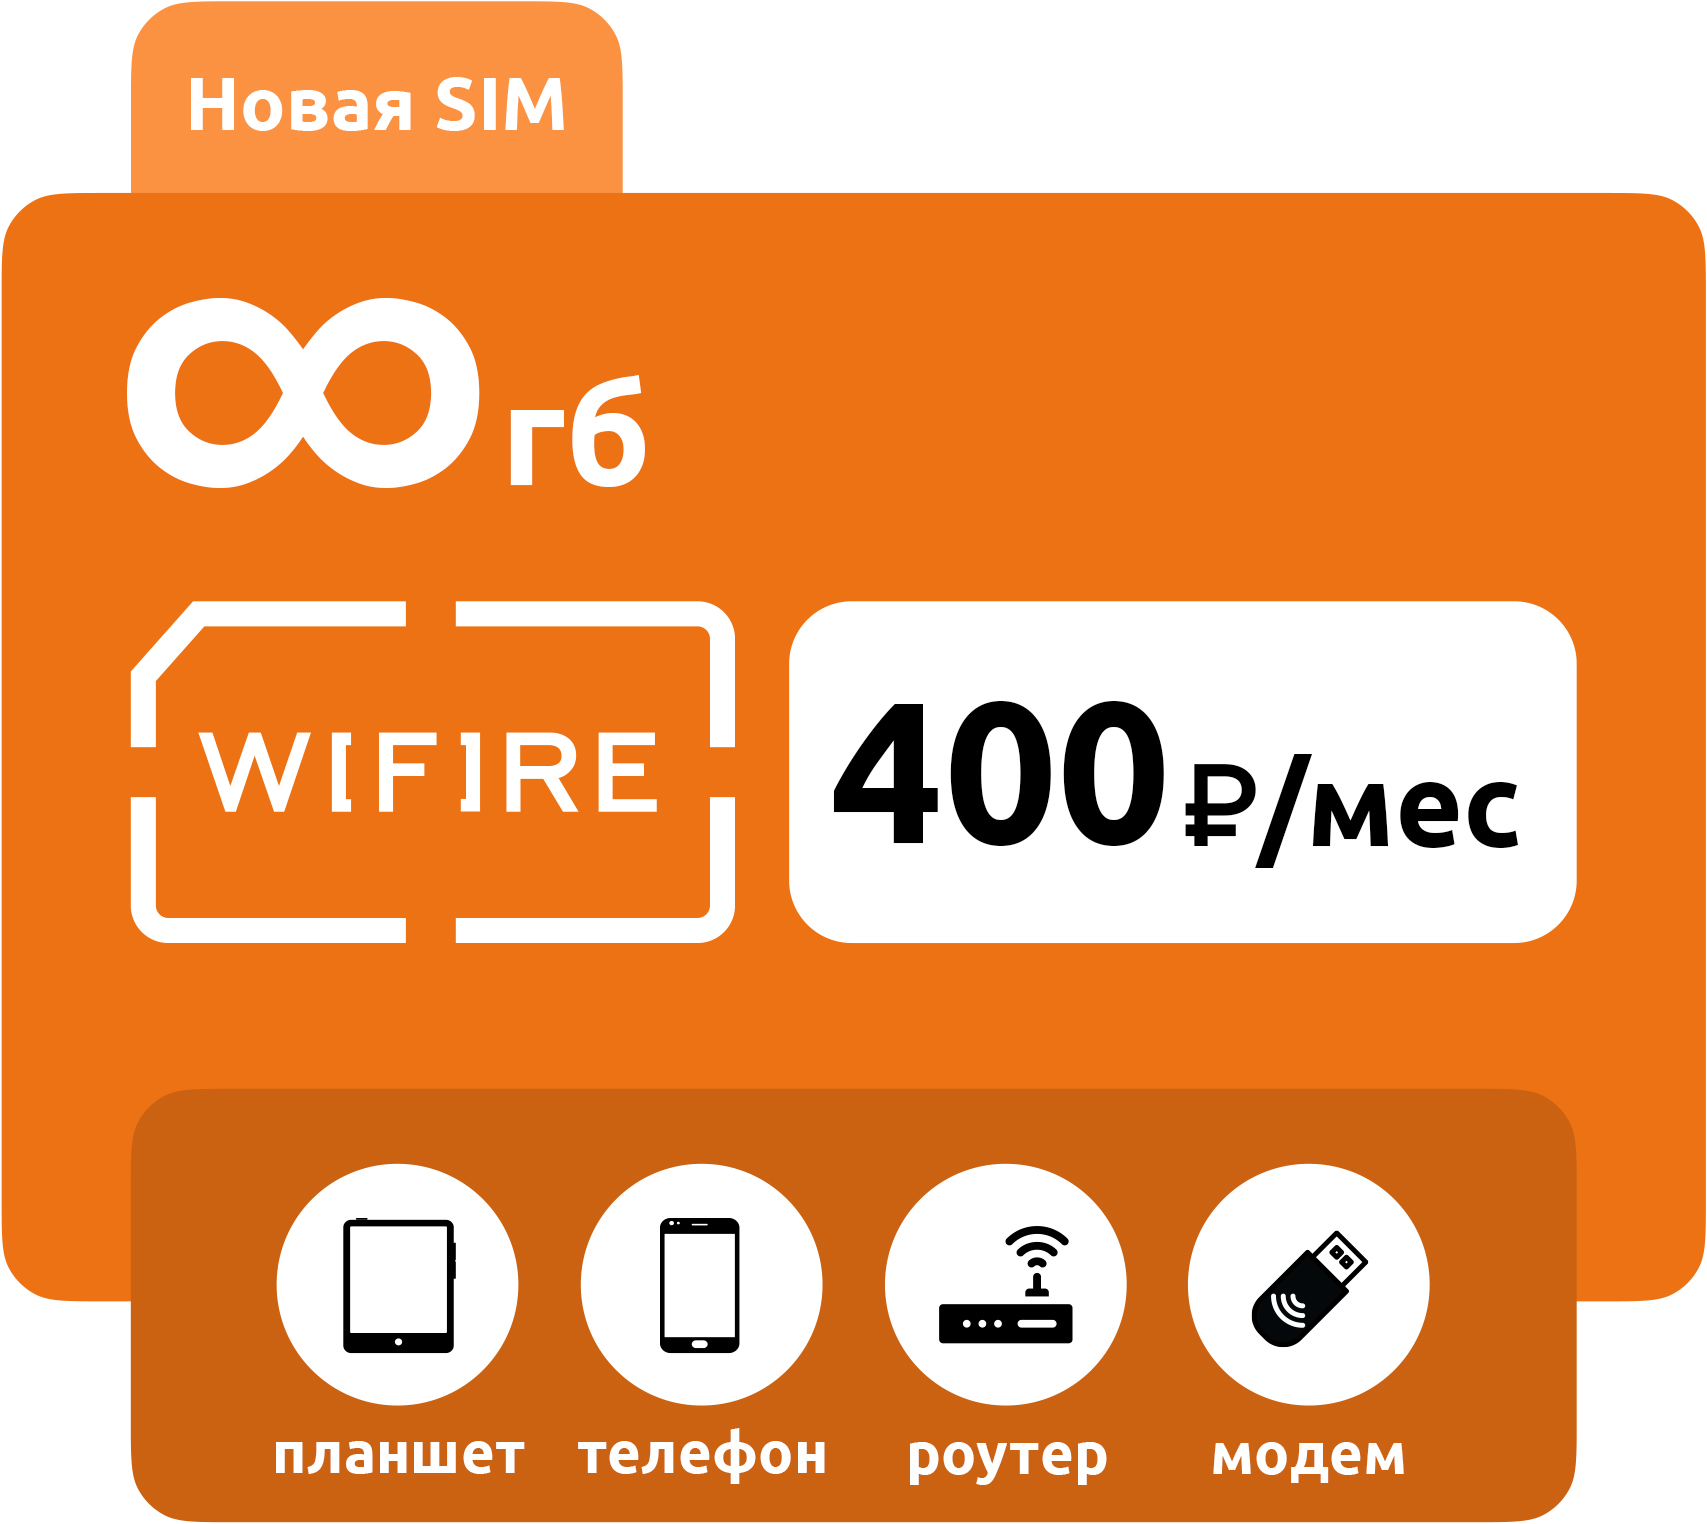 SIM-карта Wifire (Мегафон) 400 Россия фото